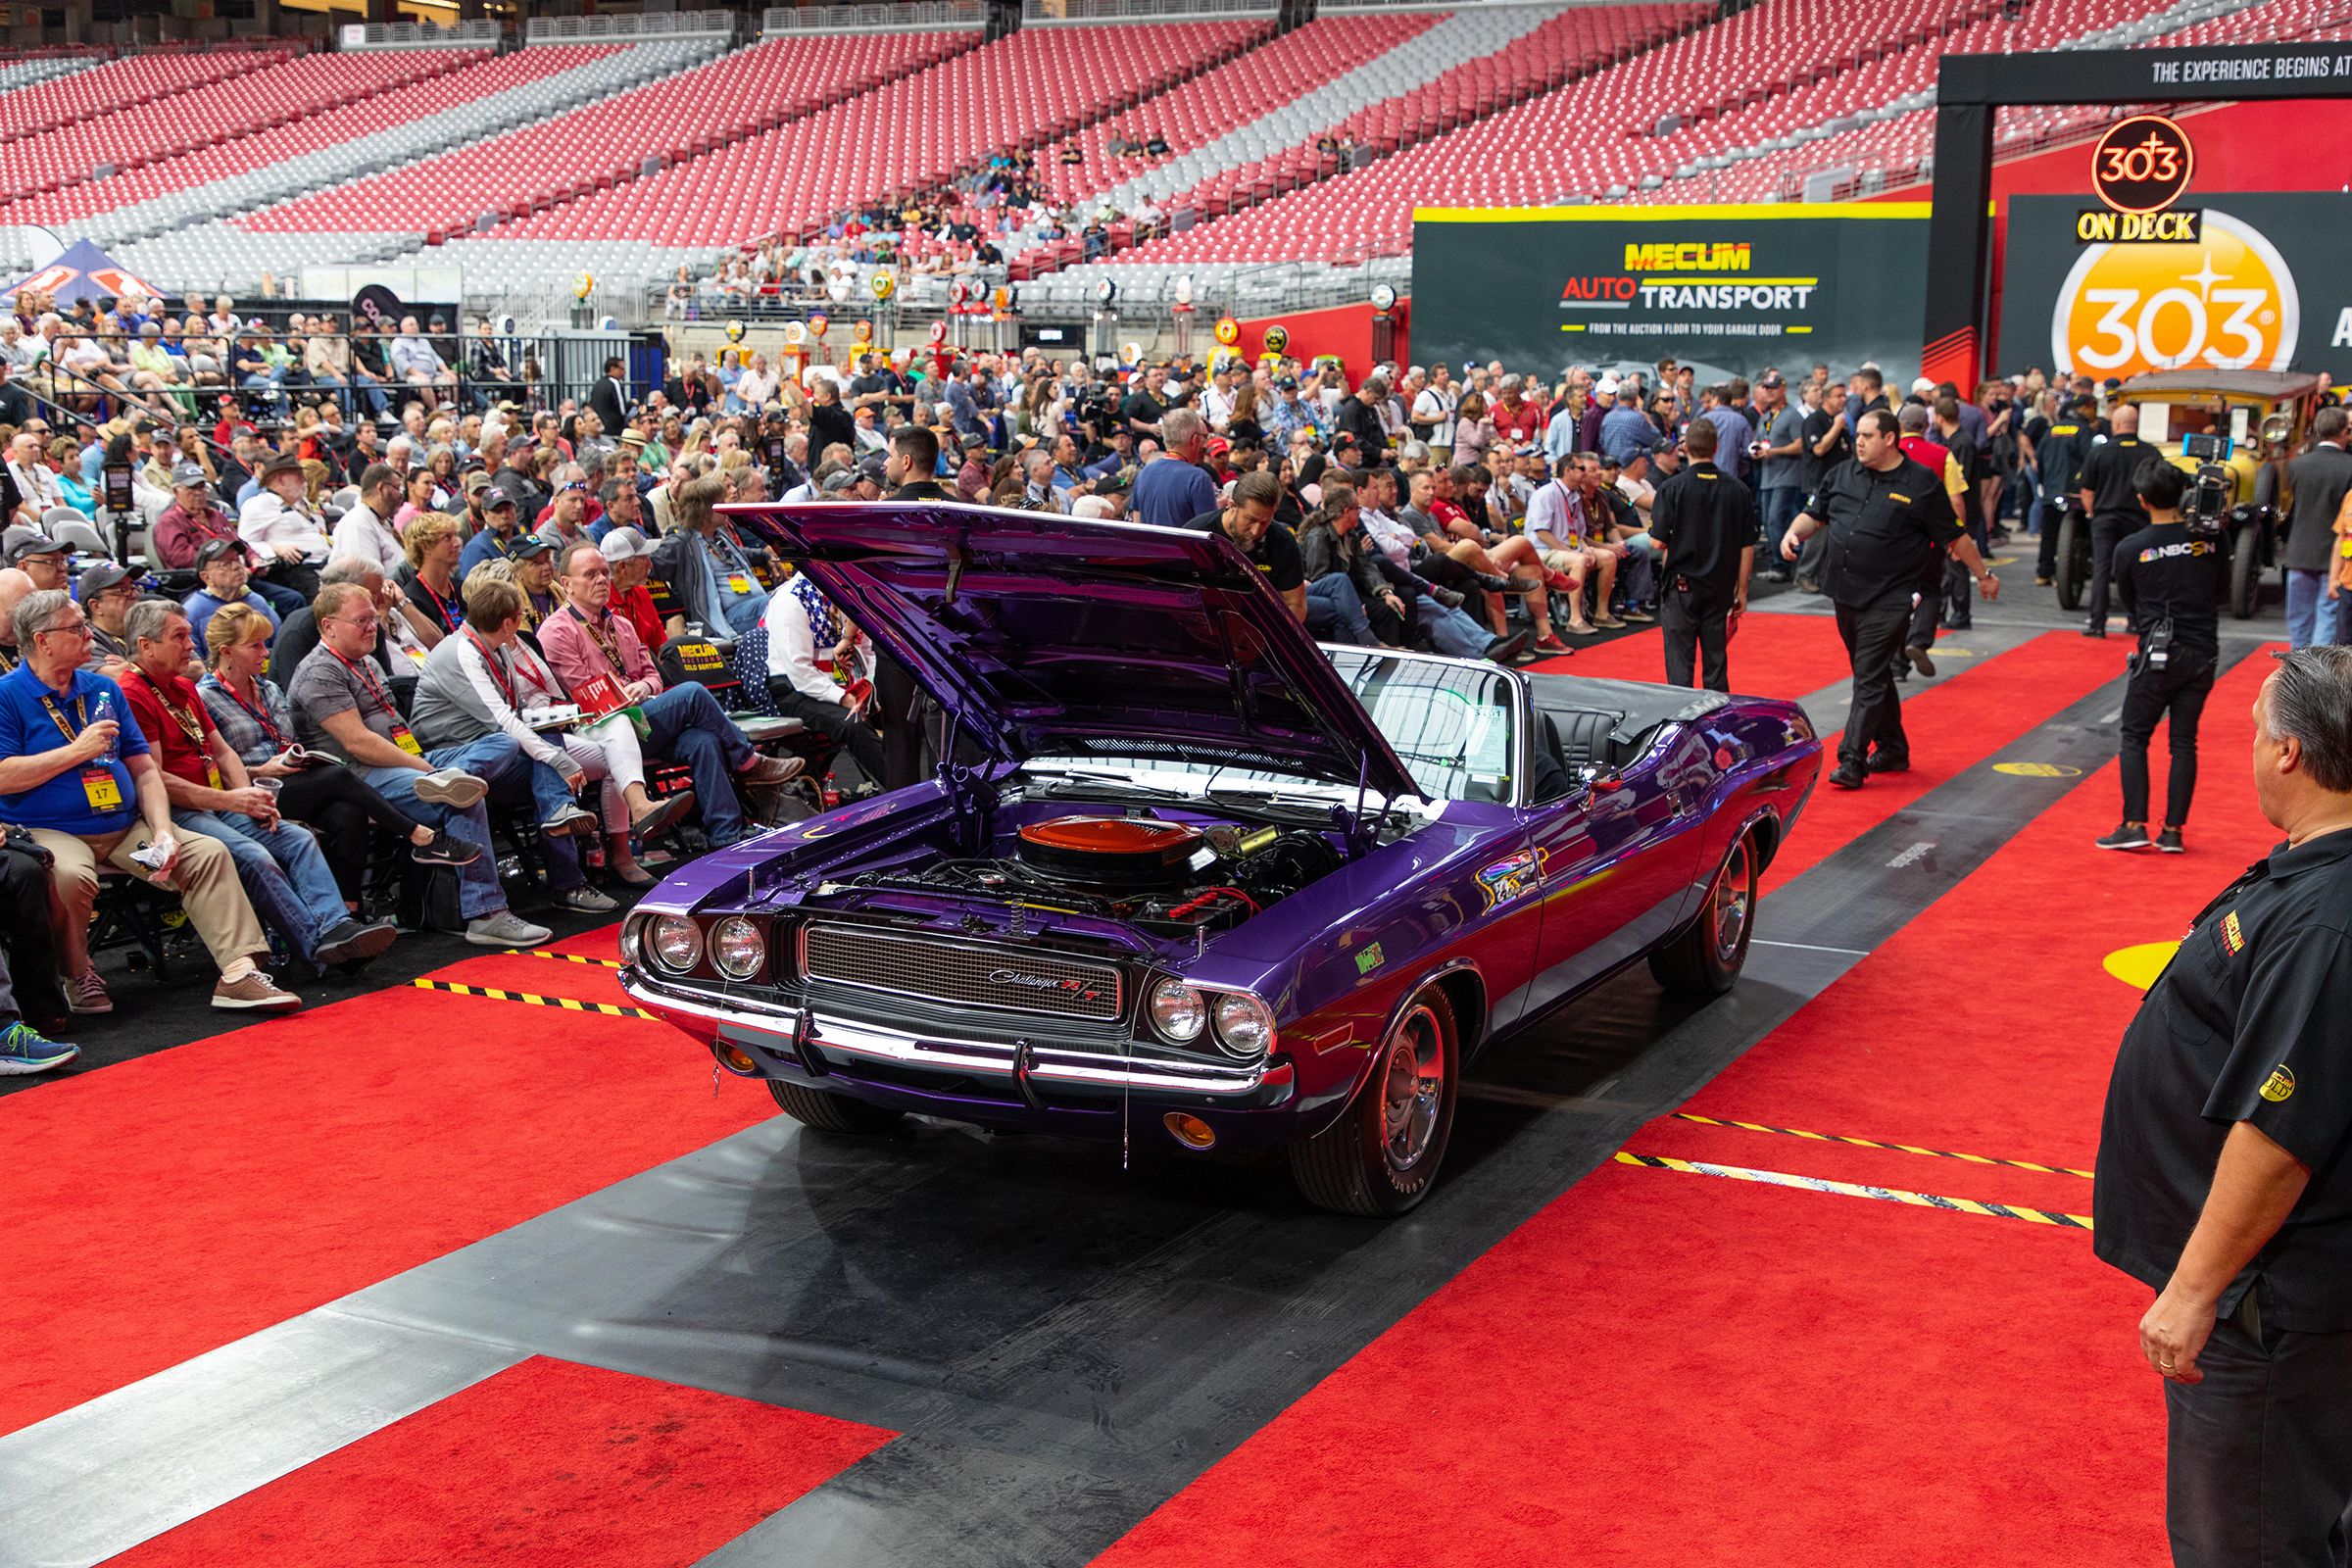 Purple Plymouth Hemi Cuda at auction